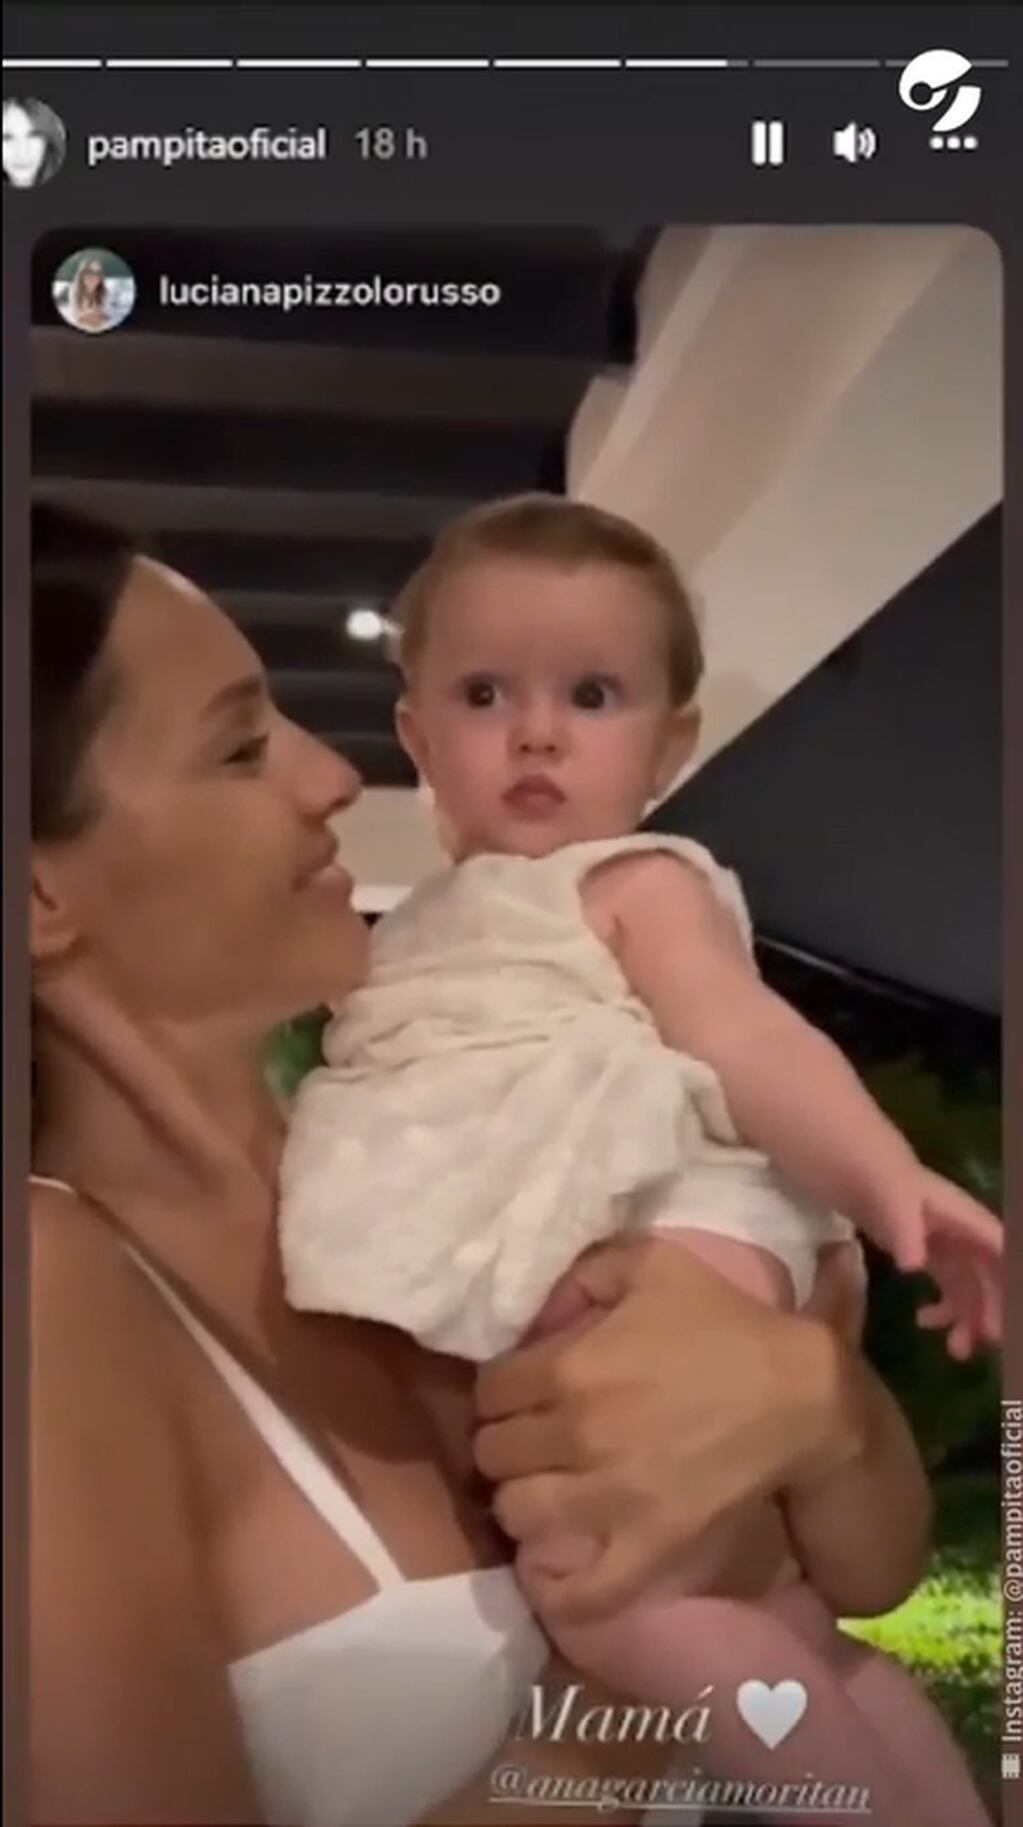 Ana la bebé de Pampita dijo mamá por primera vez.